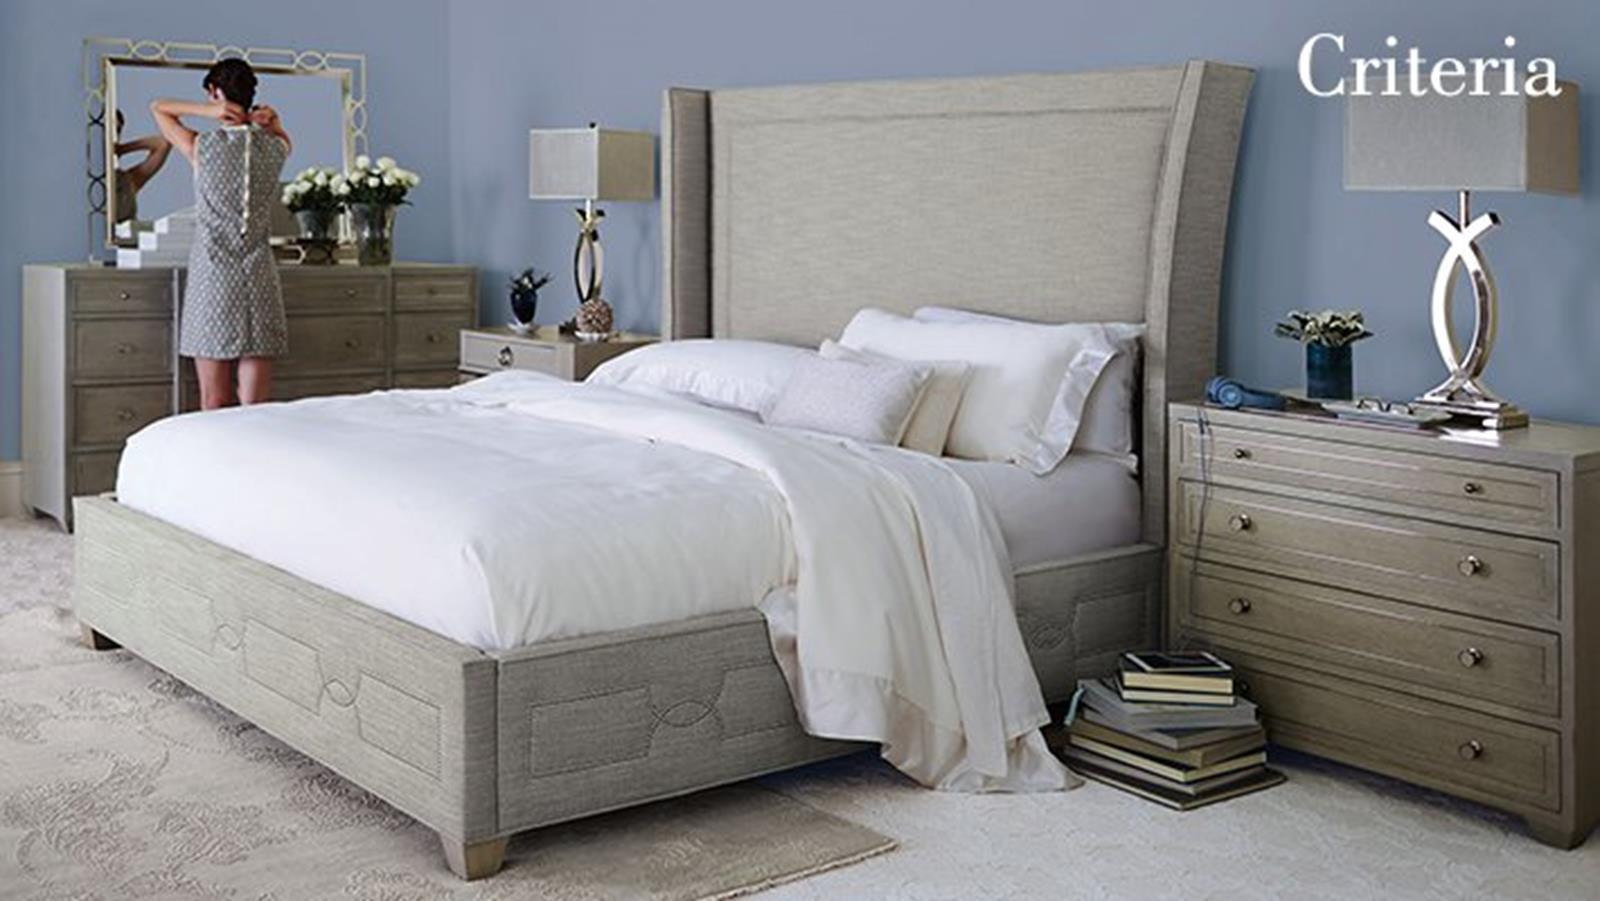 Bernhardt Criteria 4pc Upholstered Panel Bedroom Set throughout measurements 1600 X 901